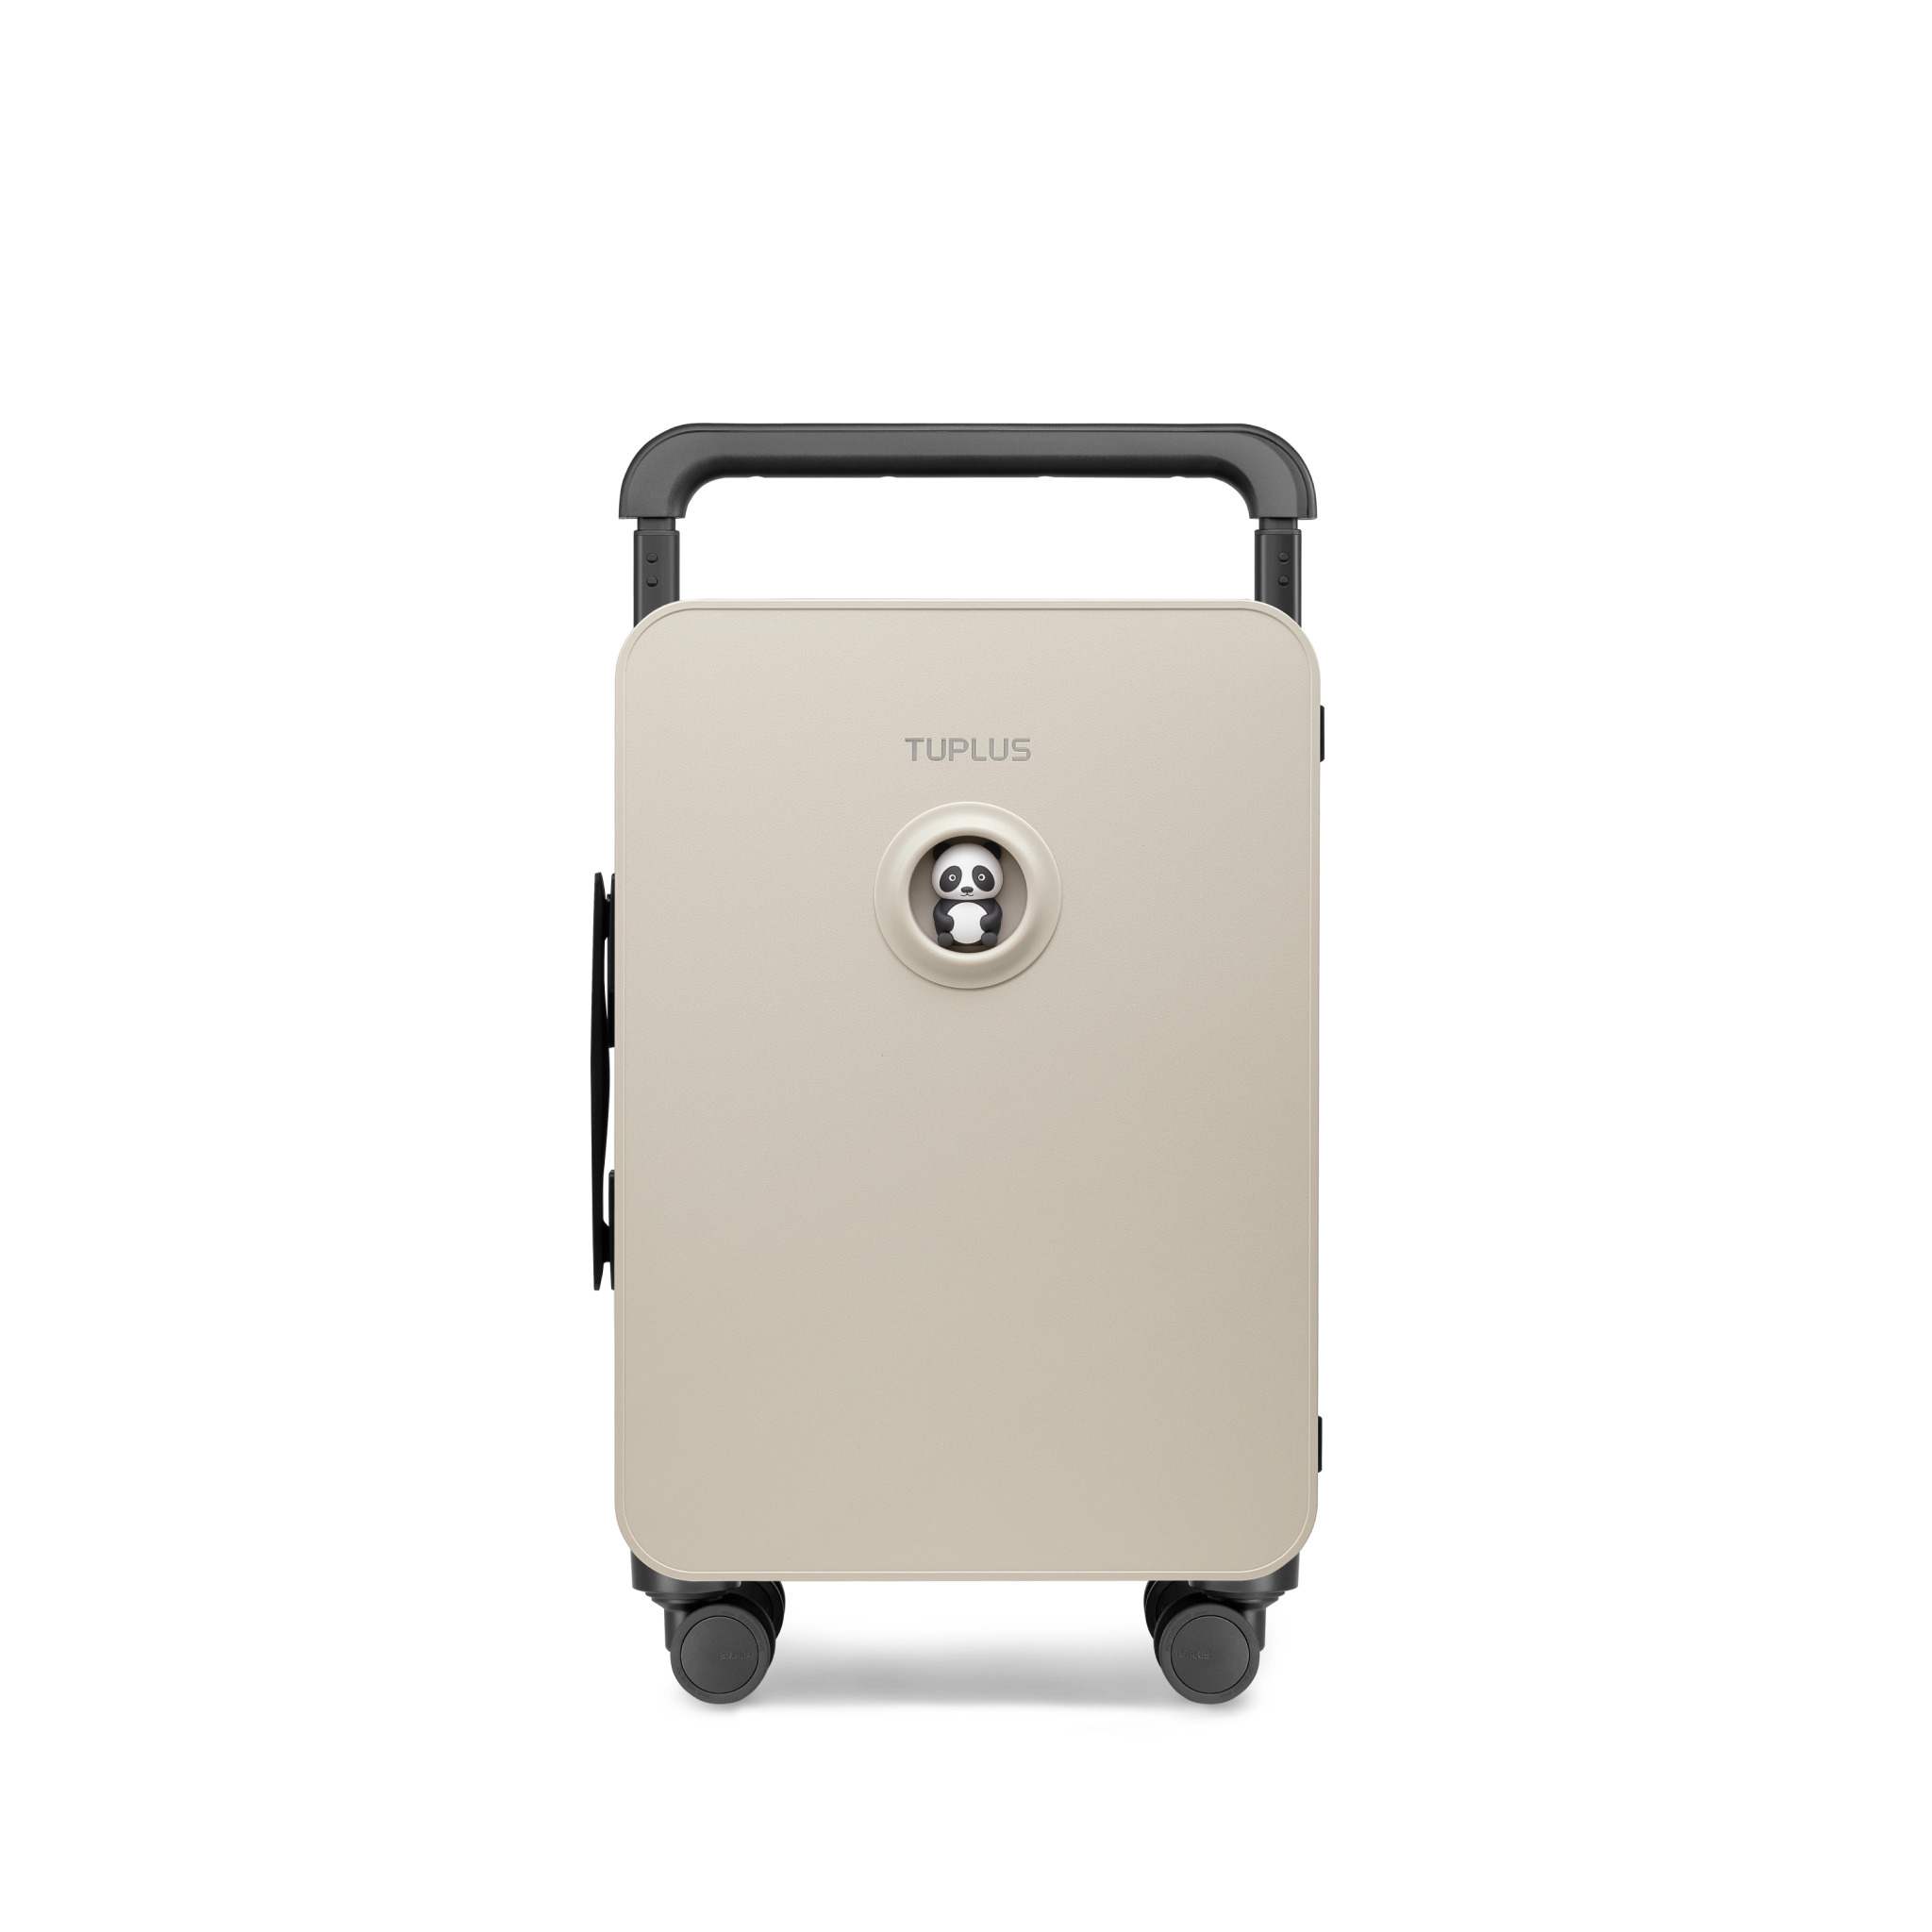 TUPLUS Balance Standard Carry-On Suitcase with Animal Figurine Inset